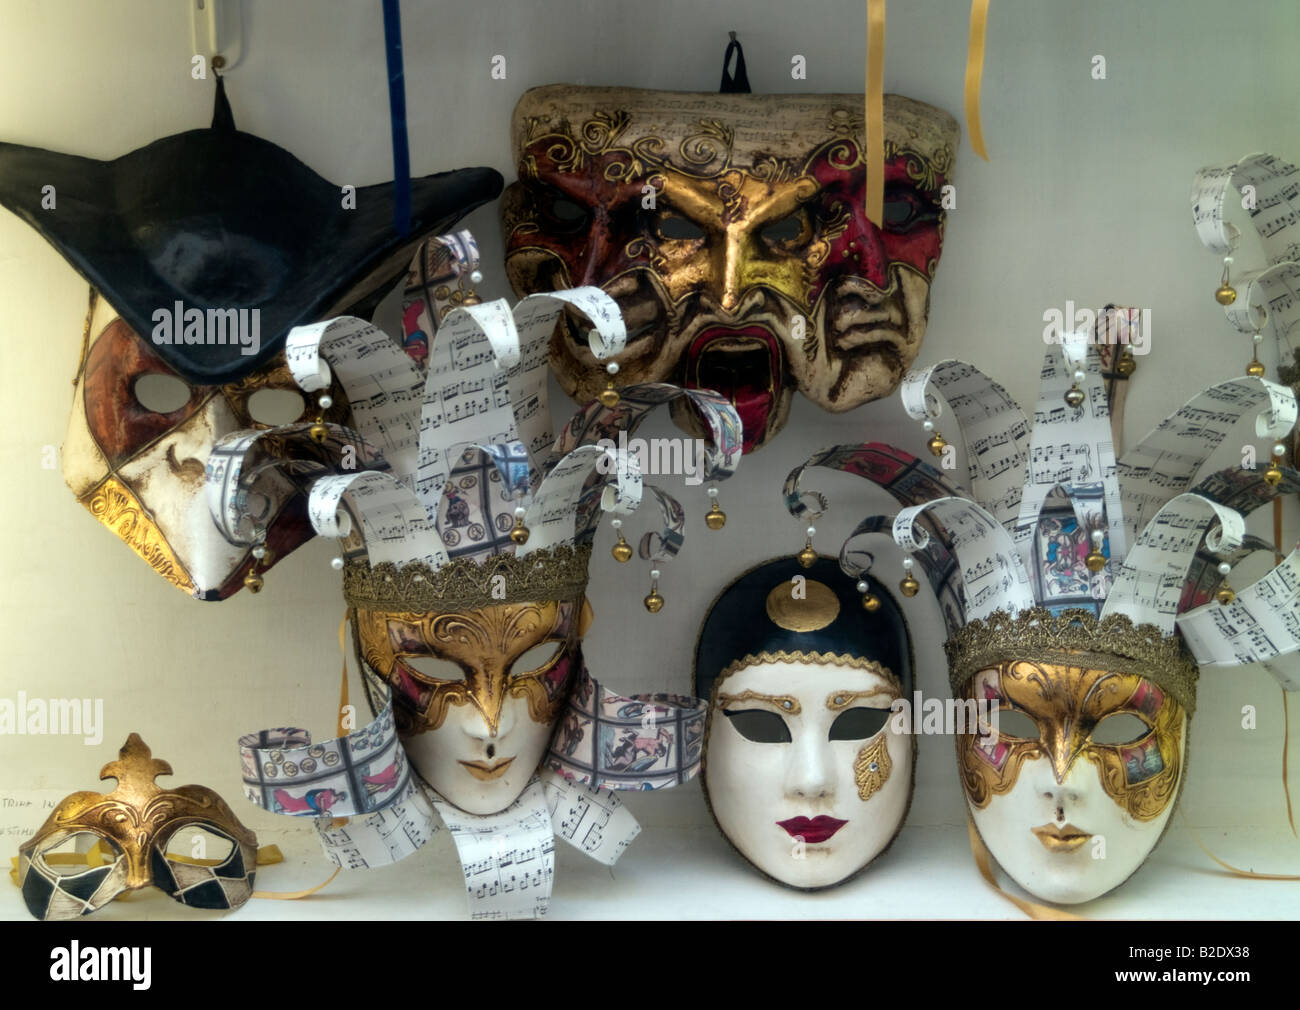 Venezia: maschere di cartapesta in un negozio Foto stock - Alamy